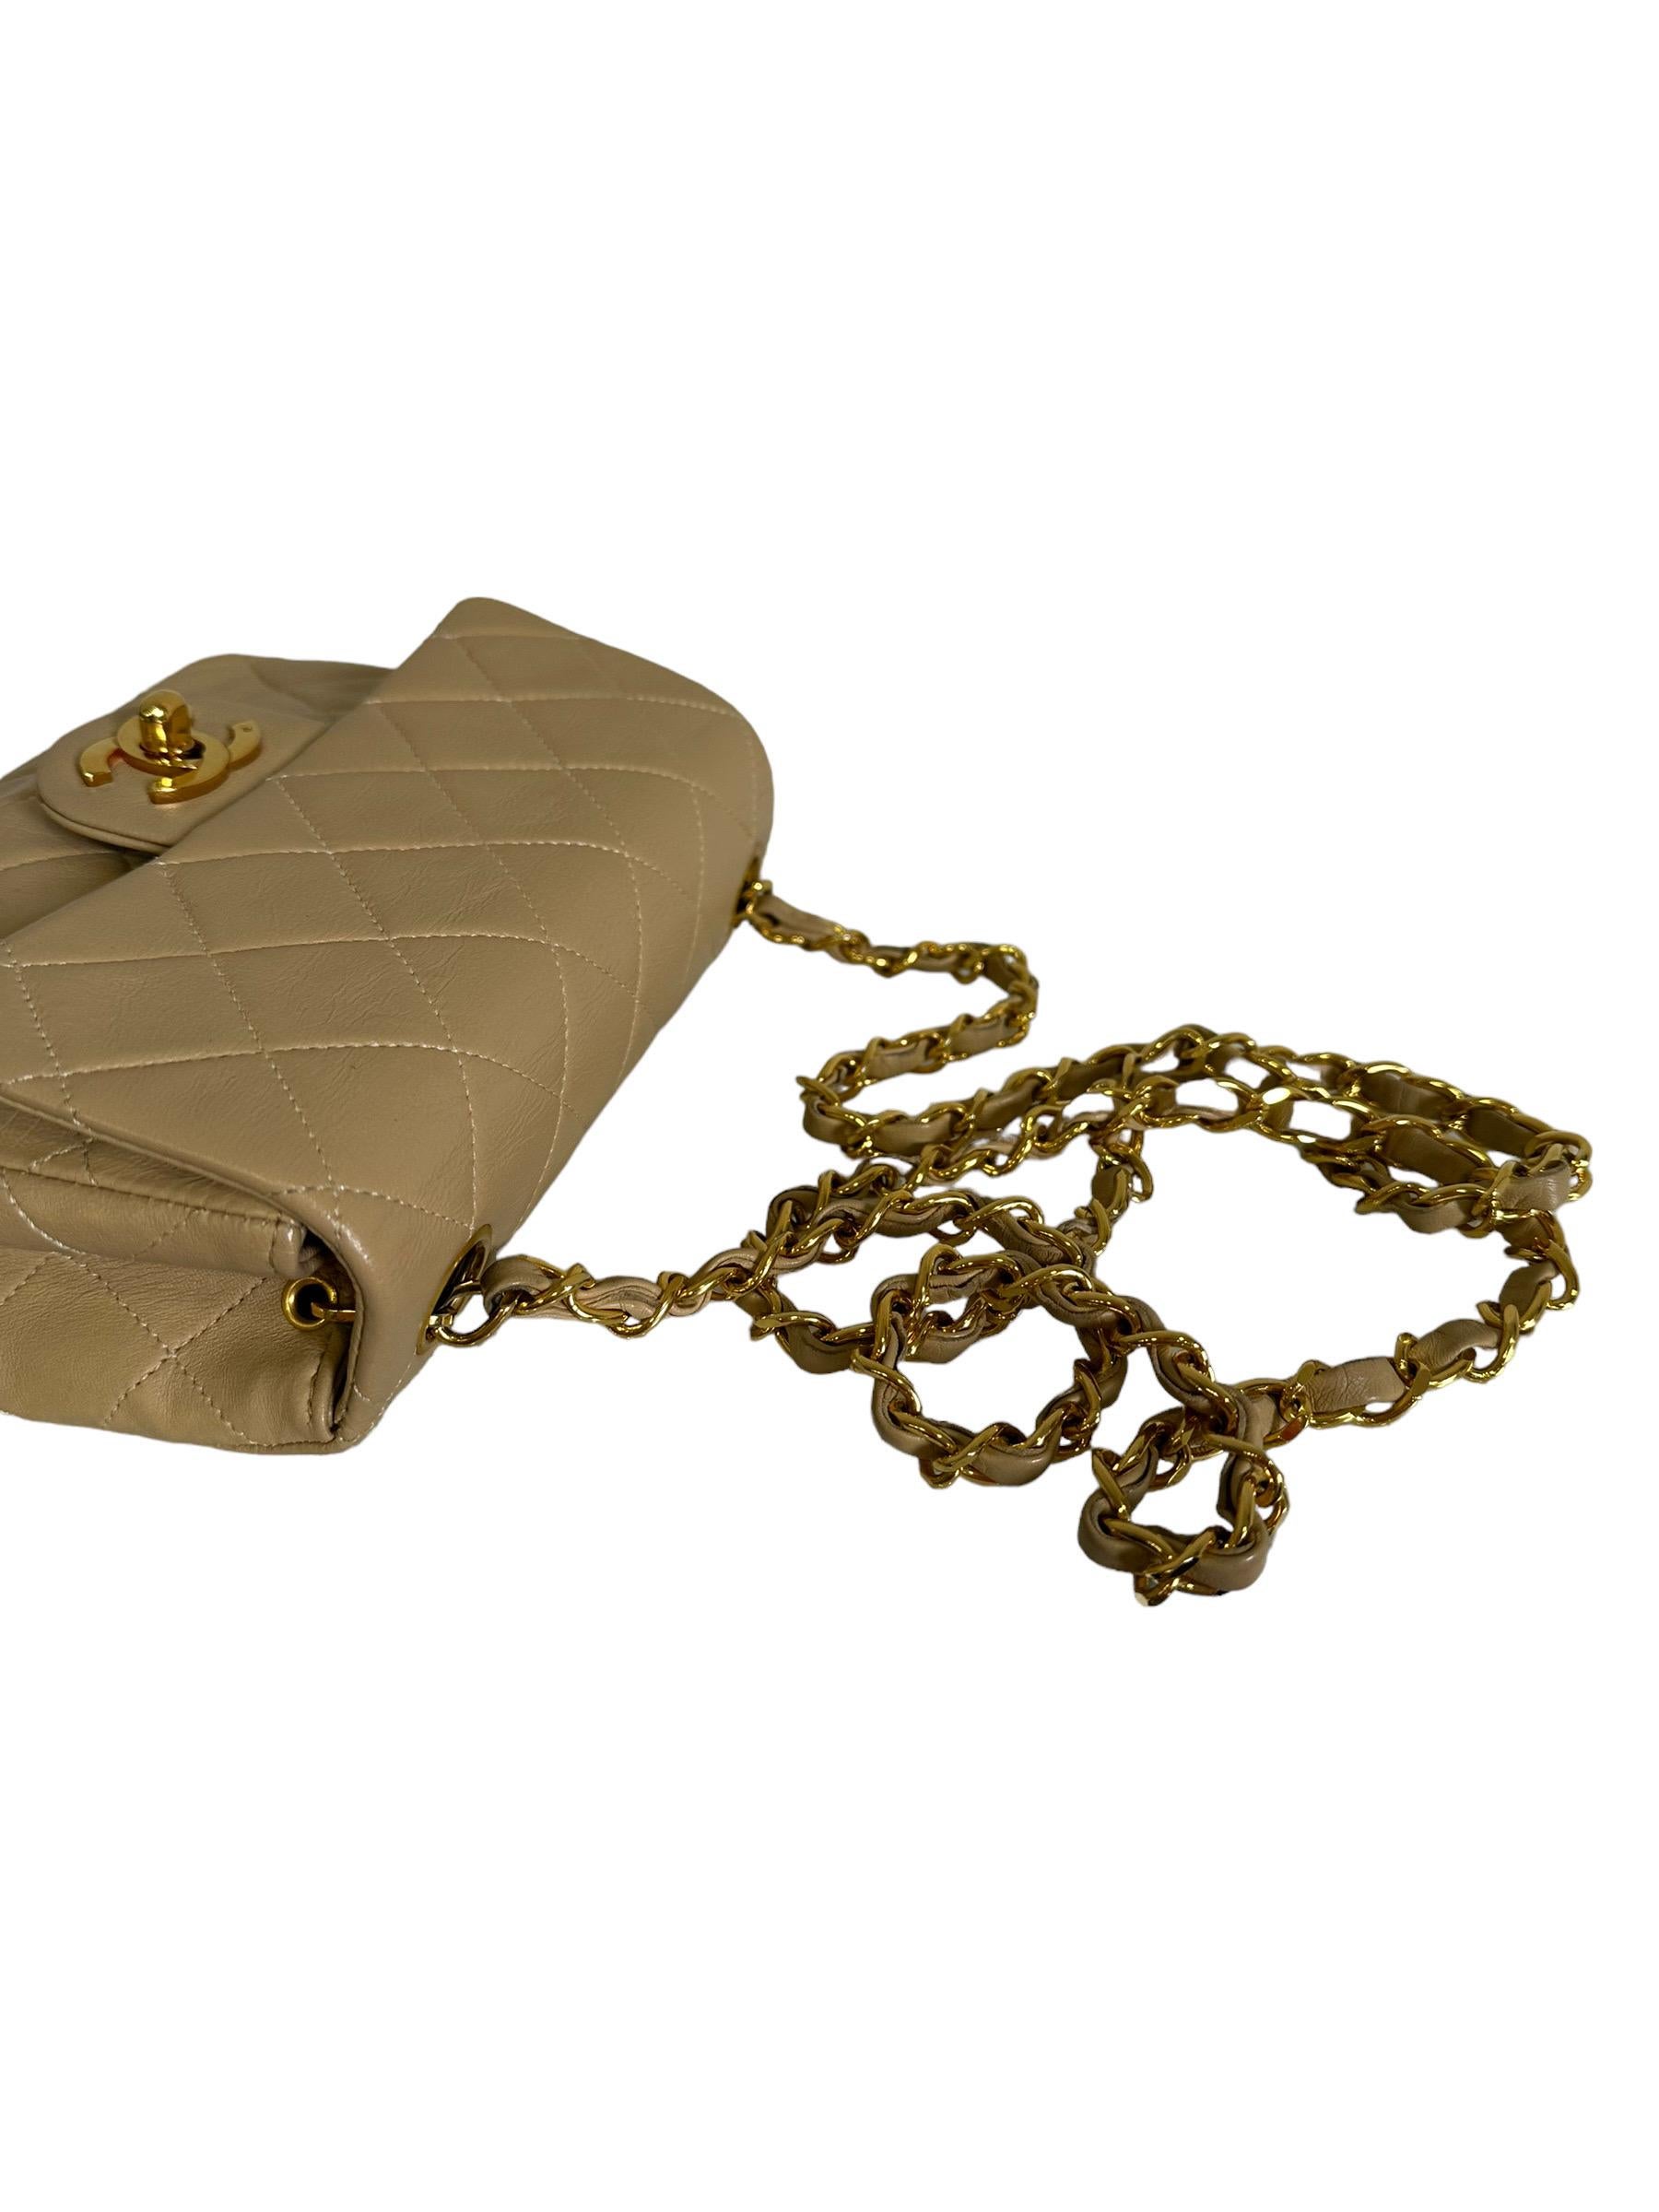 1990s Chanel Mini Flap Beige Leather Shoulder Bag For Sale 5